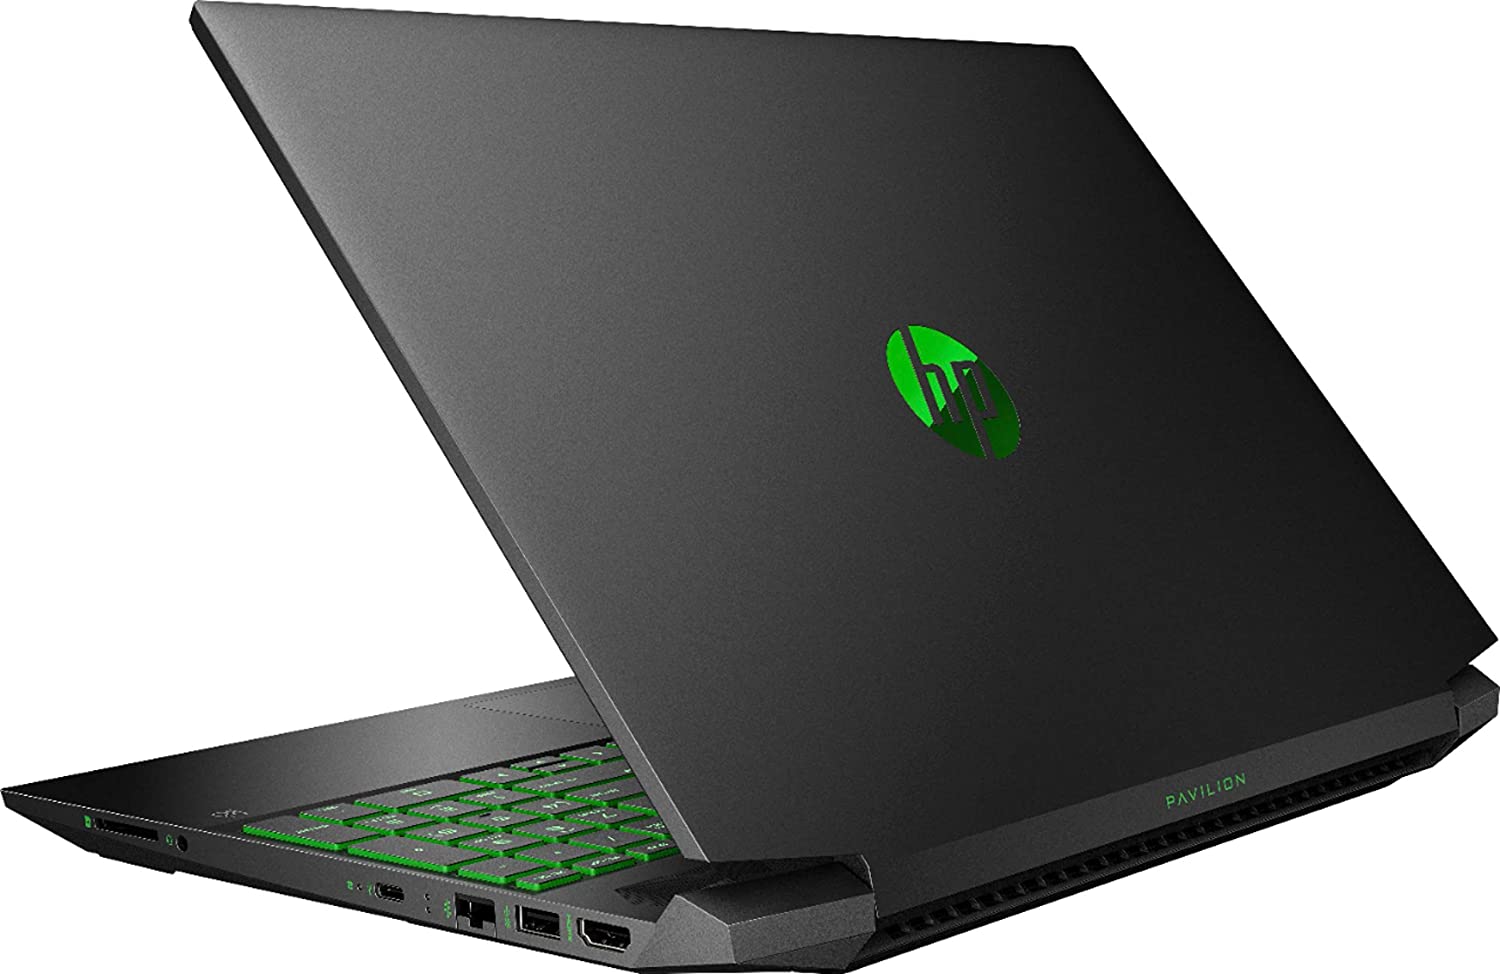 HP - Pavilion 15.6inch Gaming Laptop - AMD Ryzen 5 - 8GB Memory - NVIDIA GeForce GTX 1650 - 256GB SSD - Shadow Black